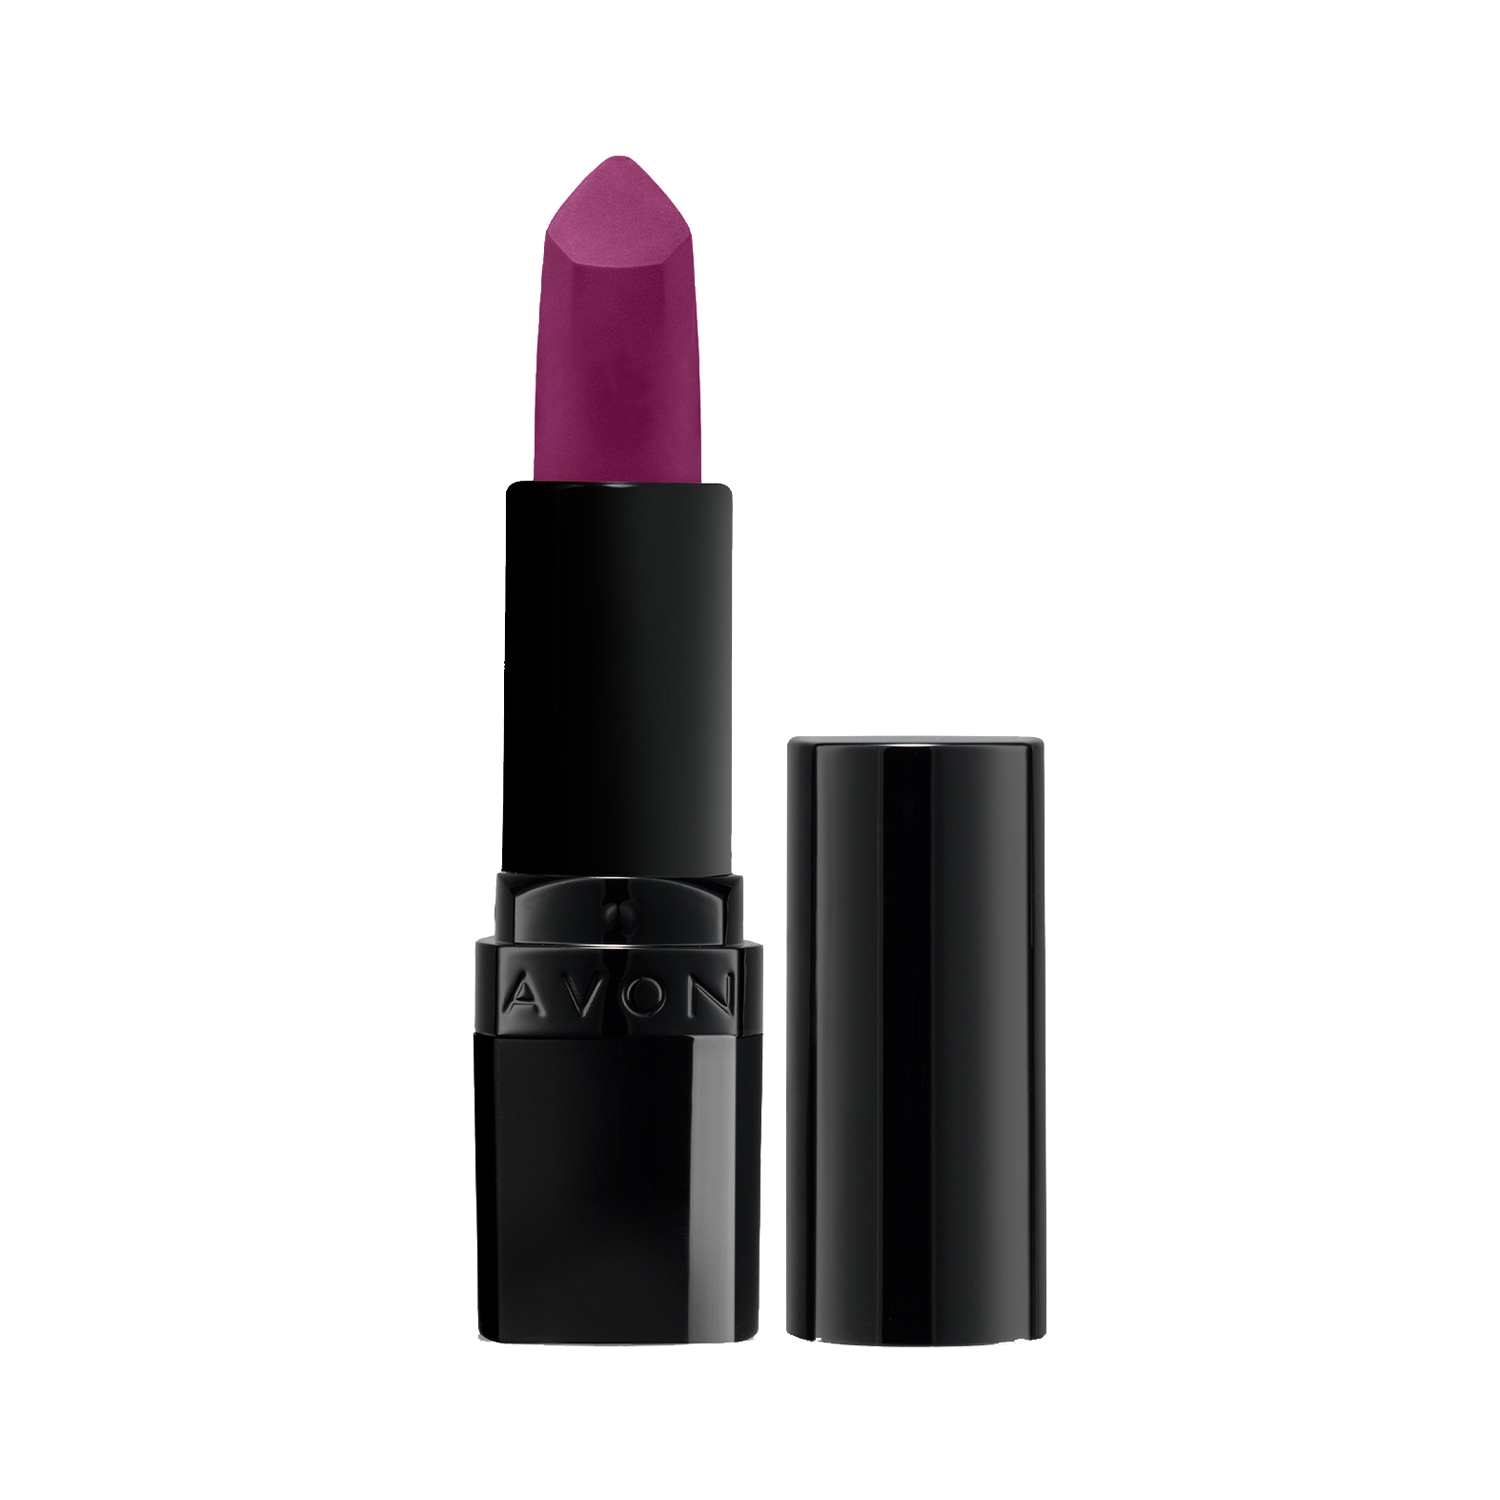 Avon | Avon Ultra Perfectly Matte Lipstick - Hot Plum (4g)